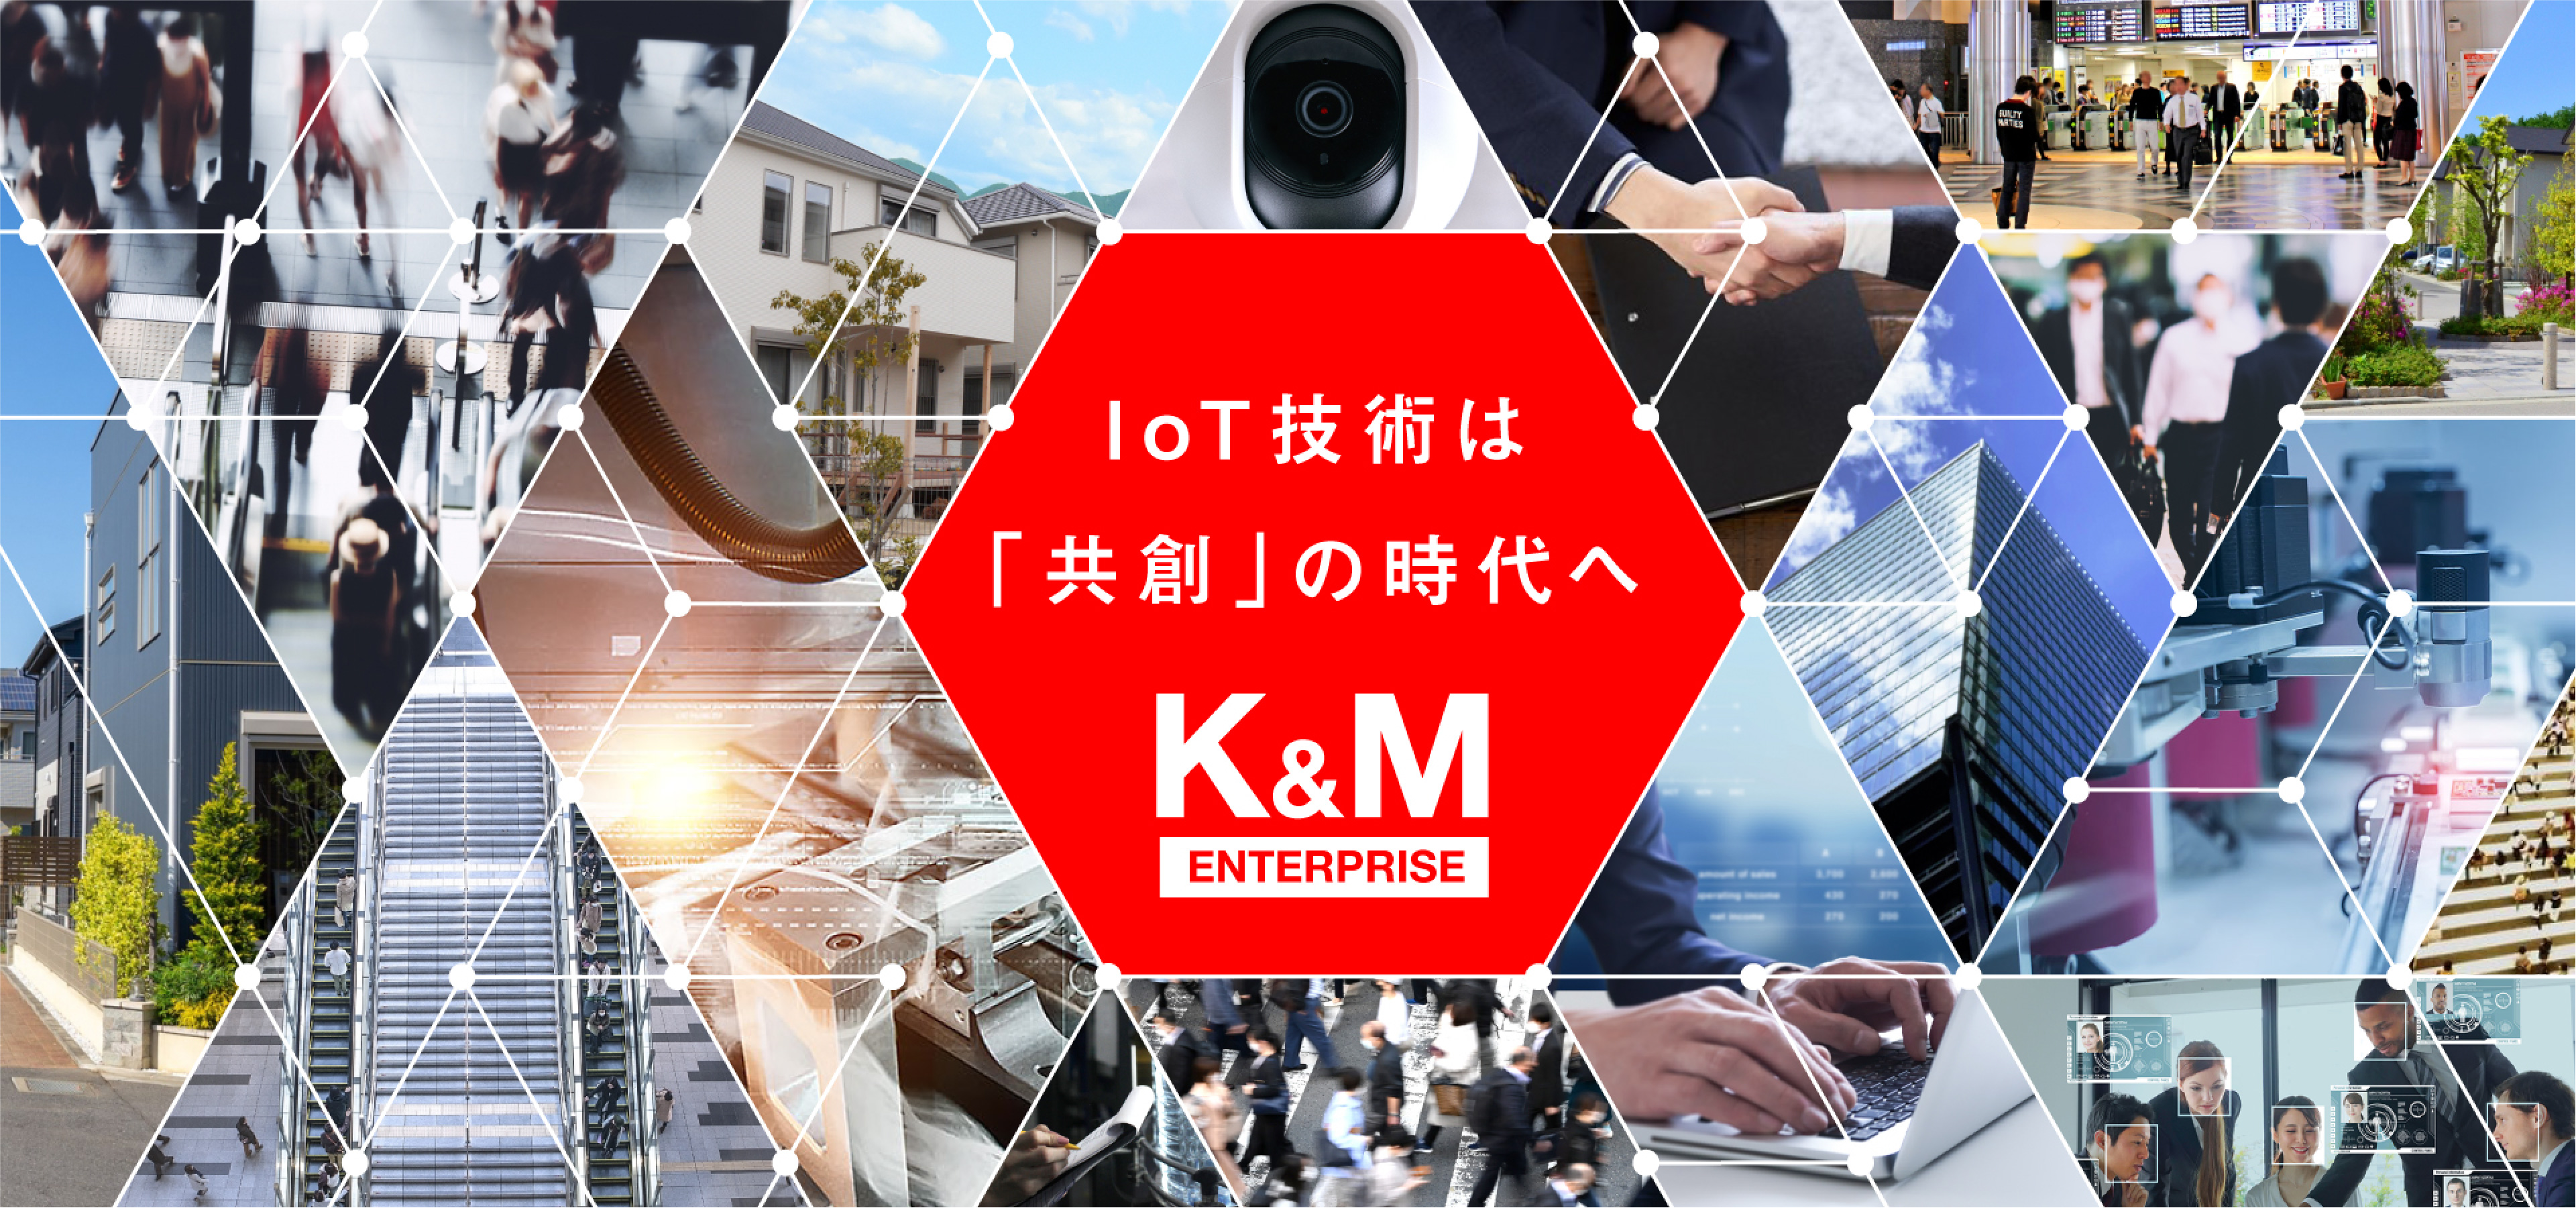 IoT技術は「共創」の時代へ K&M ENTERPRISE